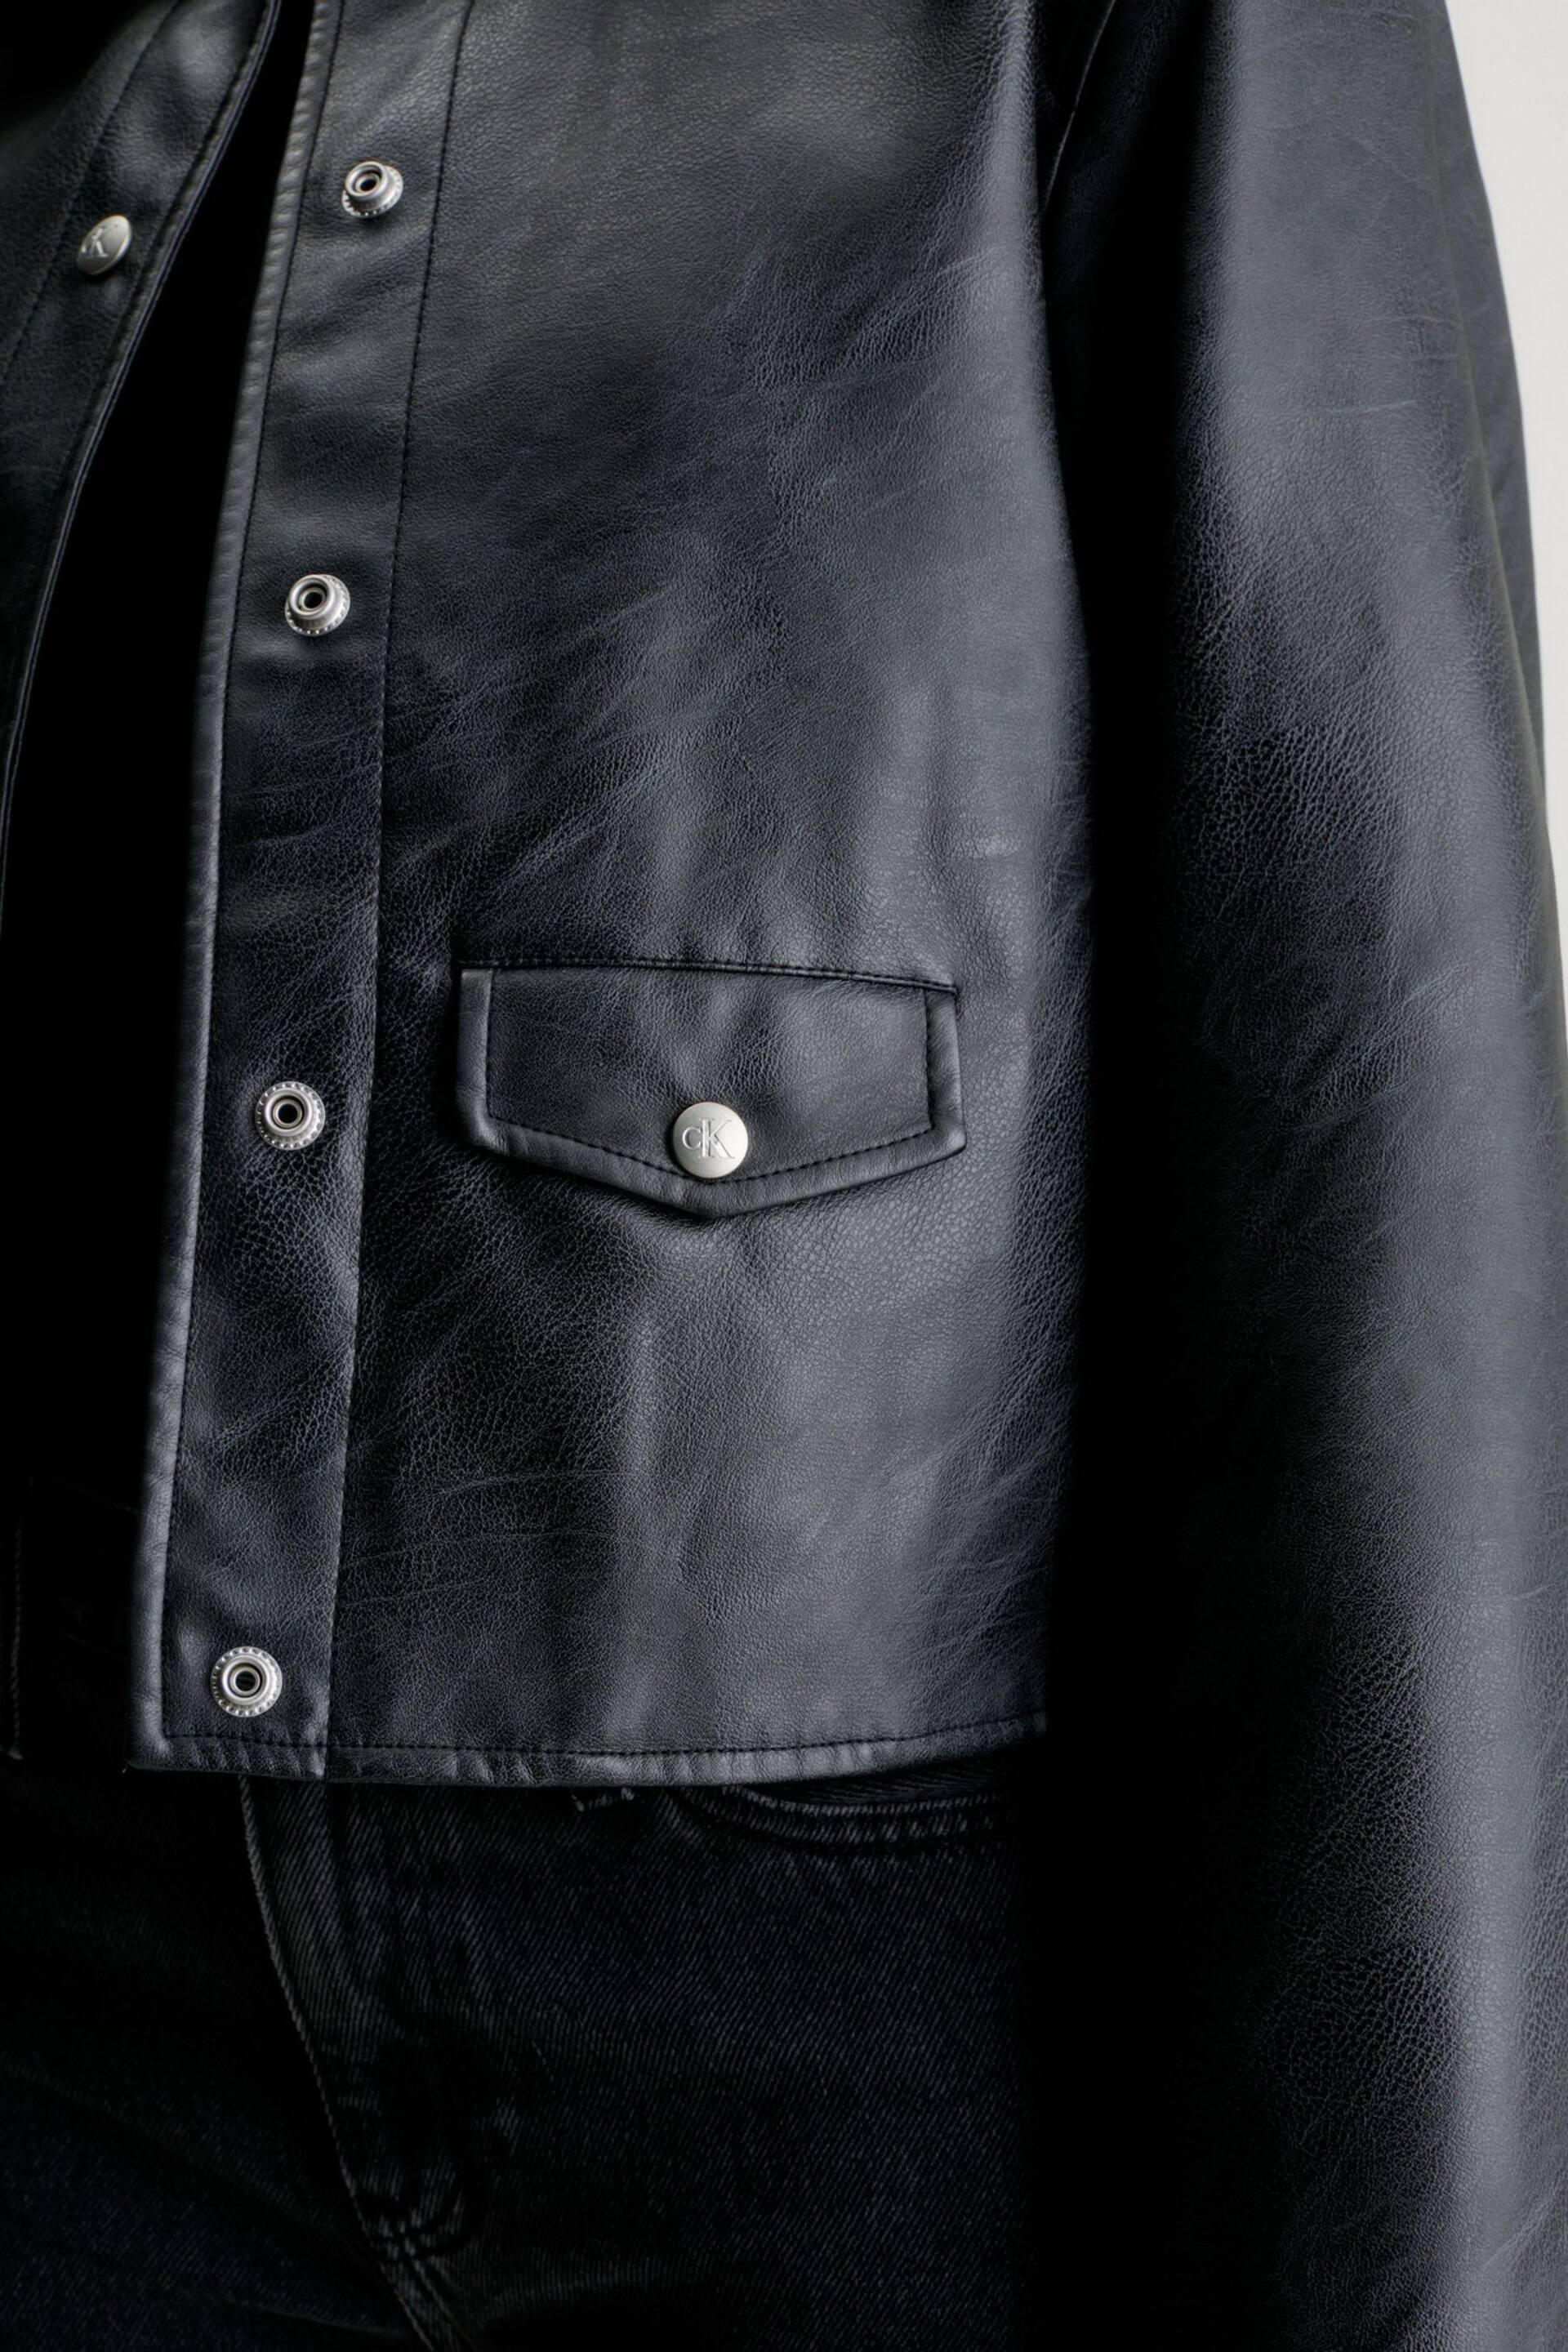 Calvin Klein Black Faux Leather Jacket - Image 5 of 6